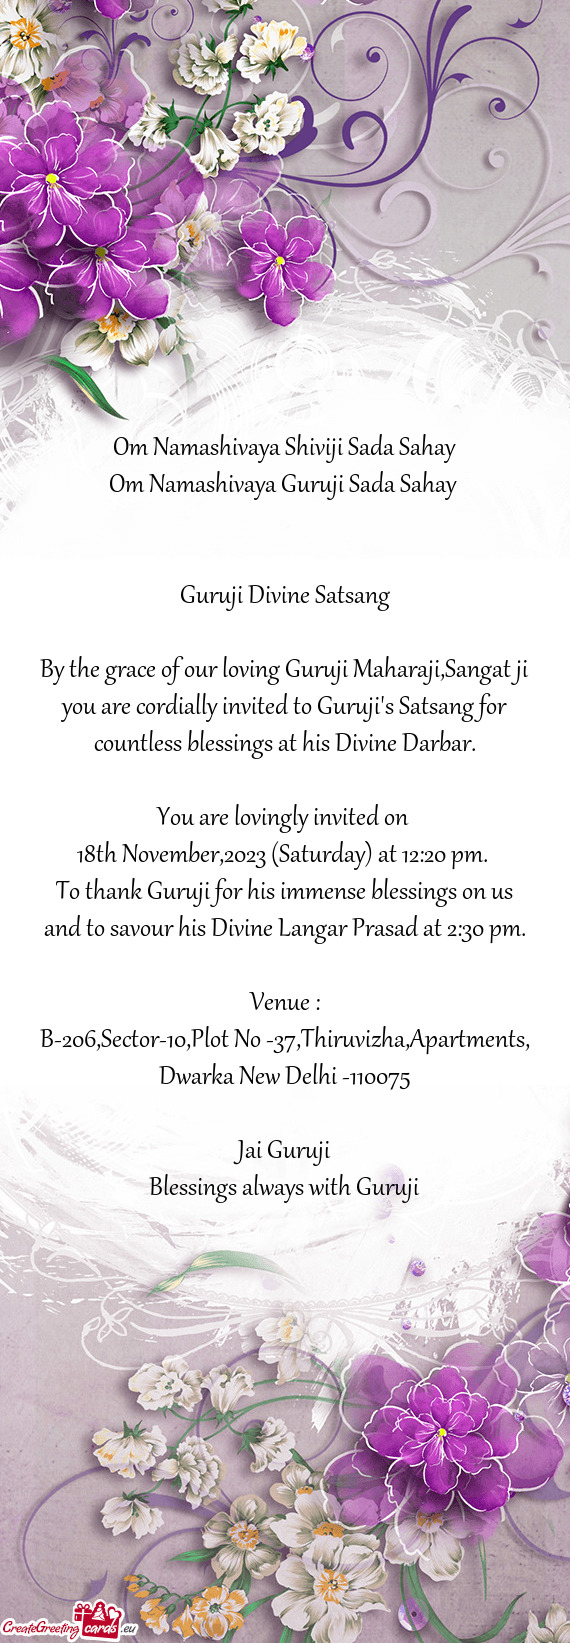 By the grace of our loving Guruji Maharaji,Sangat ji you are cordially invited to Guruji